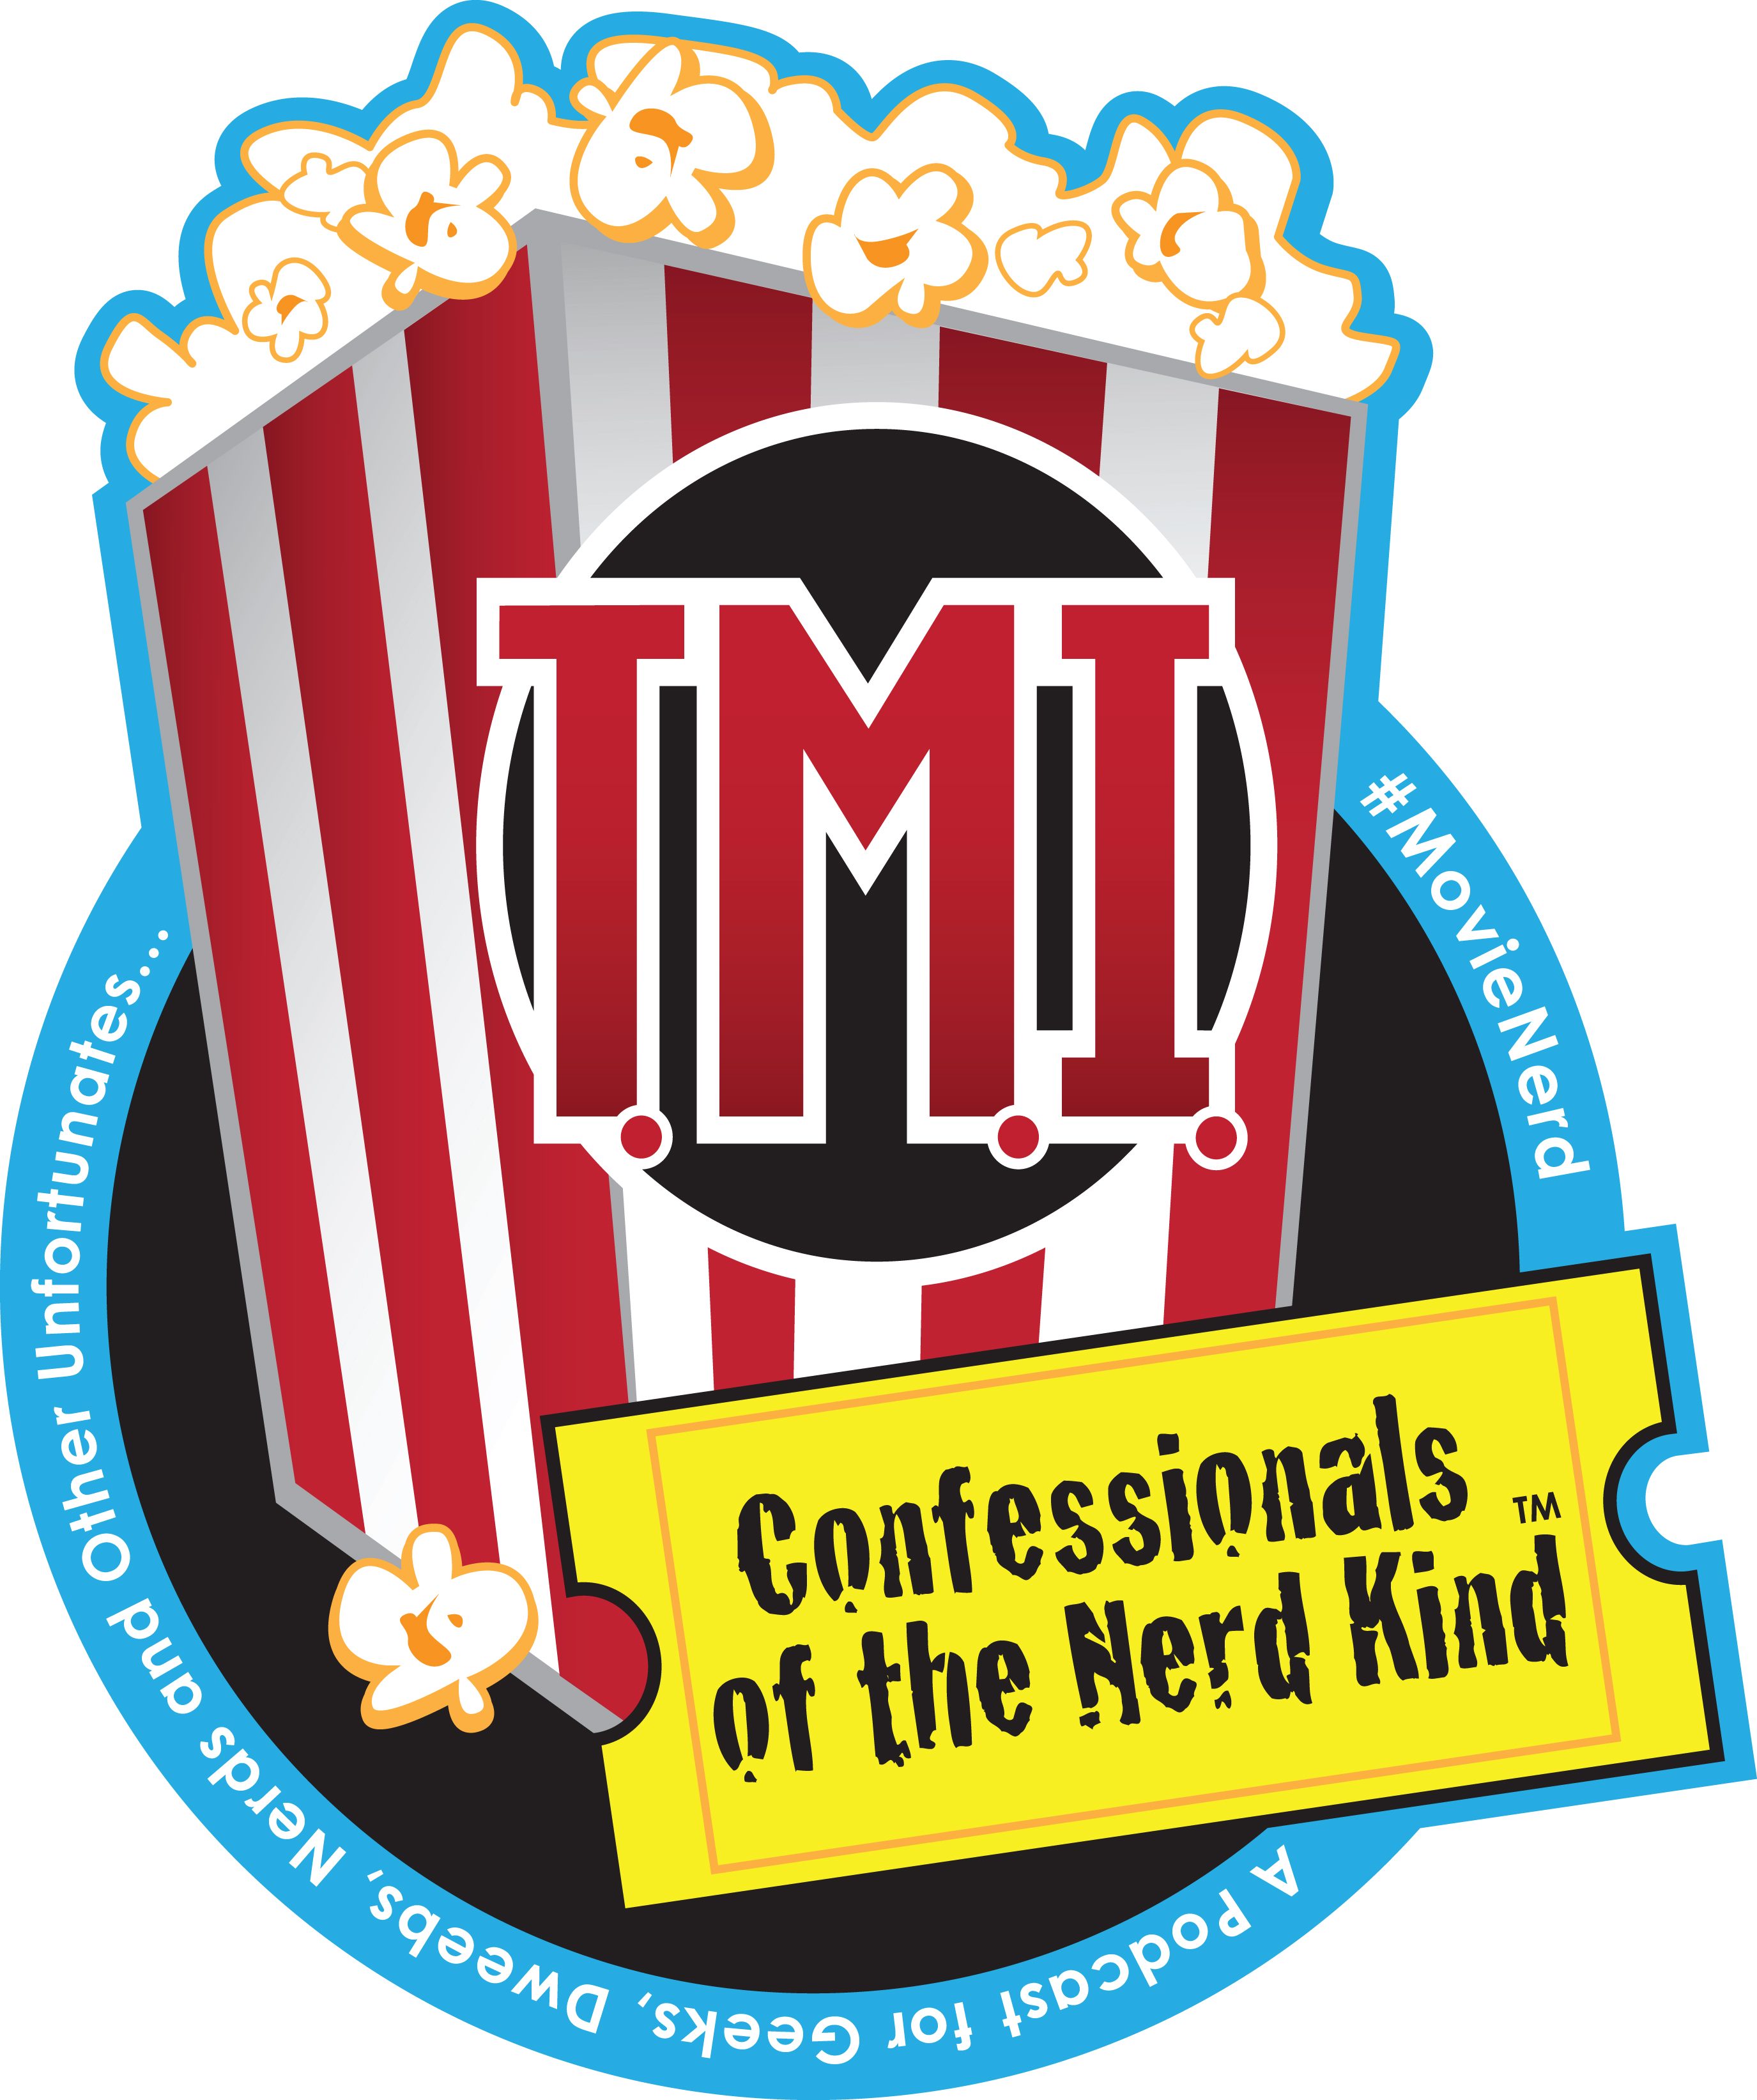 TMI Confessionals of the Nerd Kind